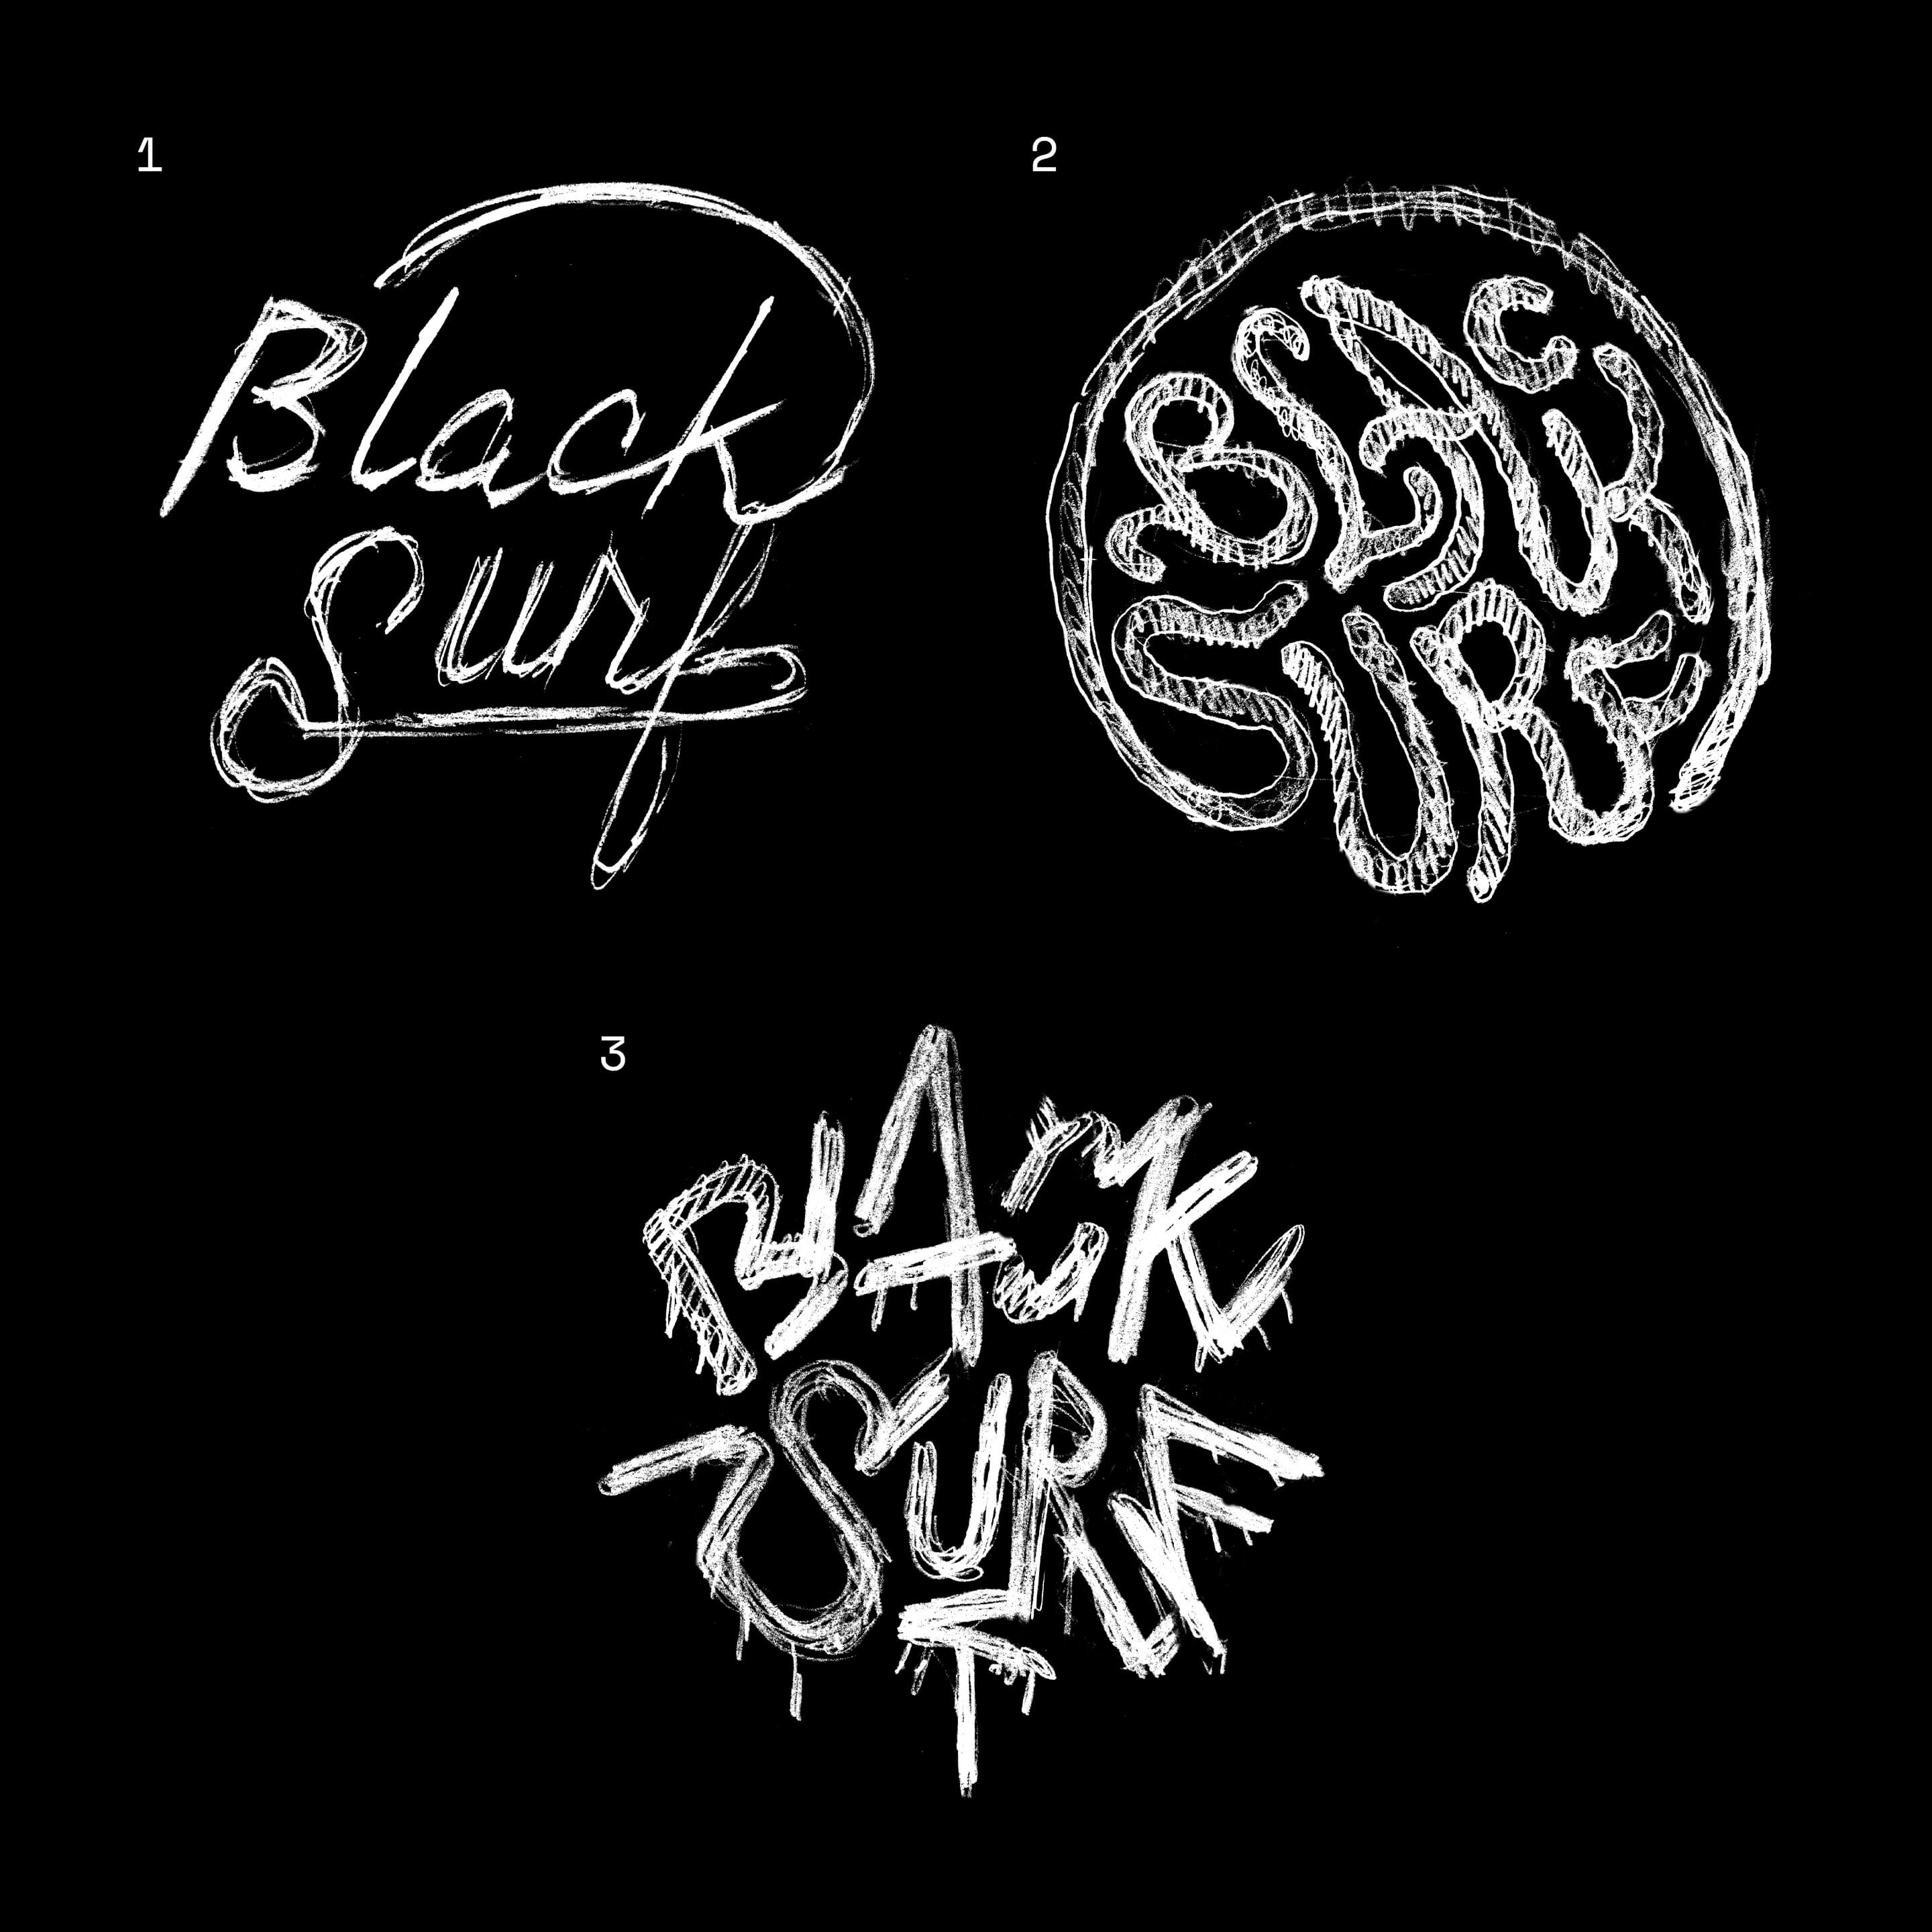 lettering_blacksurf_1440x900_sketches_2